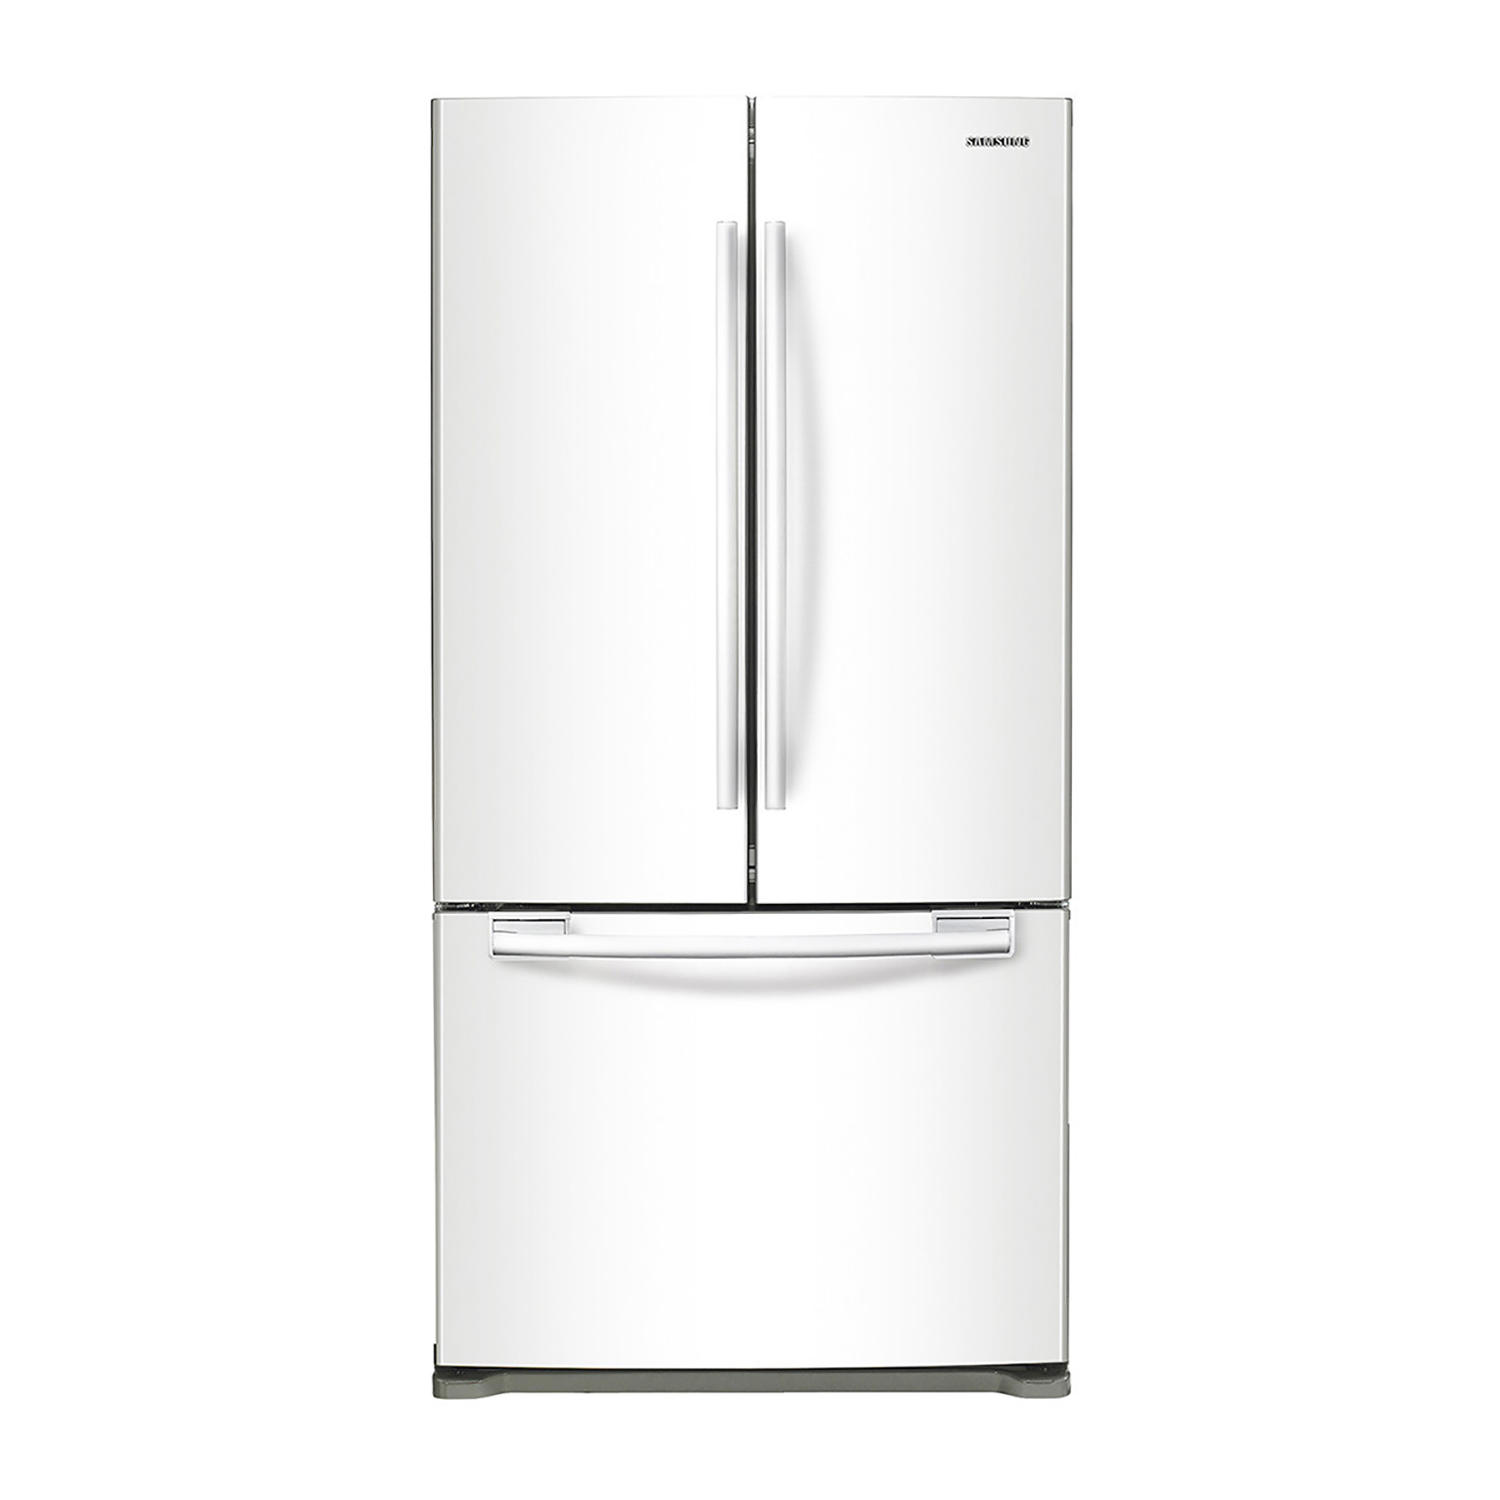 Samsung 17.5 cu. ft. French Door Counter-Depth Refrigerator